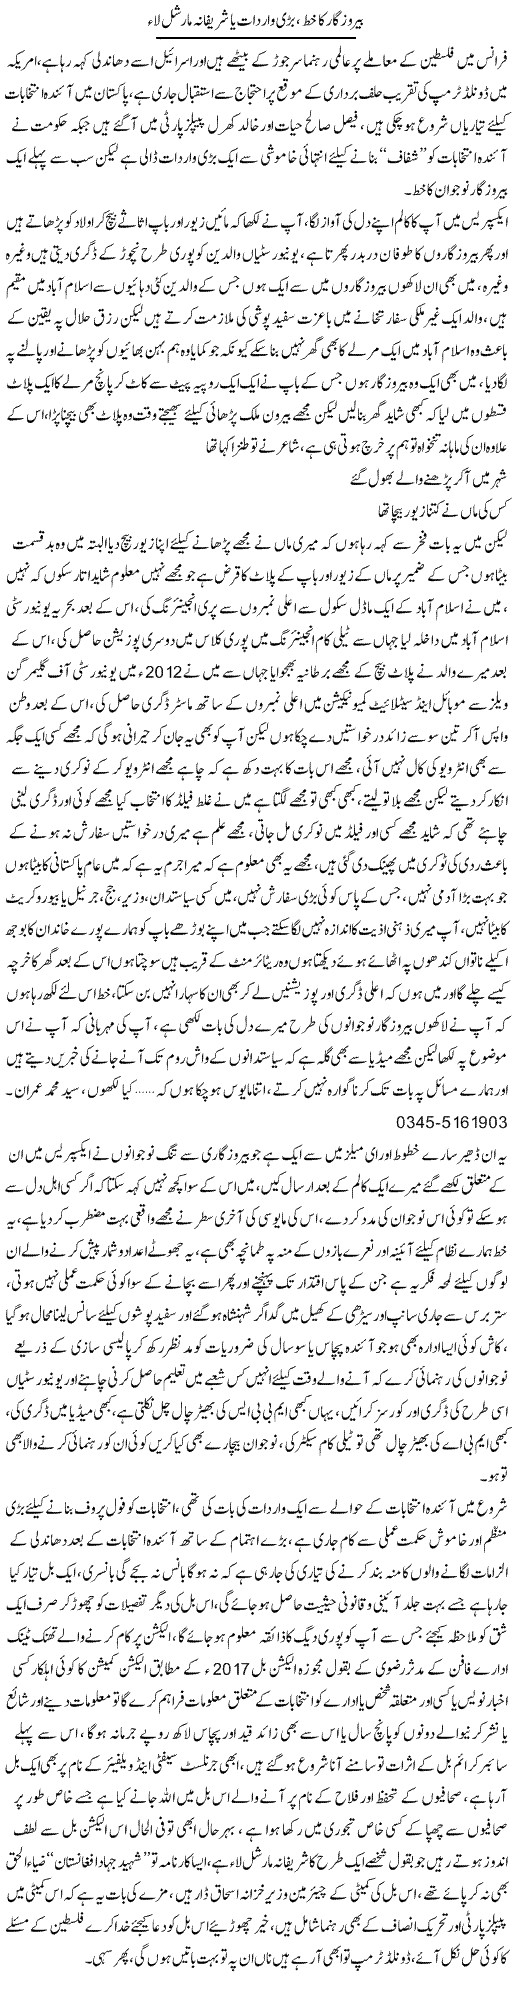 Berozgar Ka Khat, Barri Wardaat Ya Sharefana Marshal Law | Ali Raza Alvi | Daily Urdu Columns